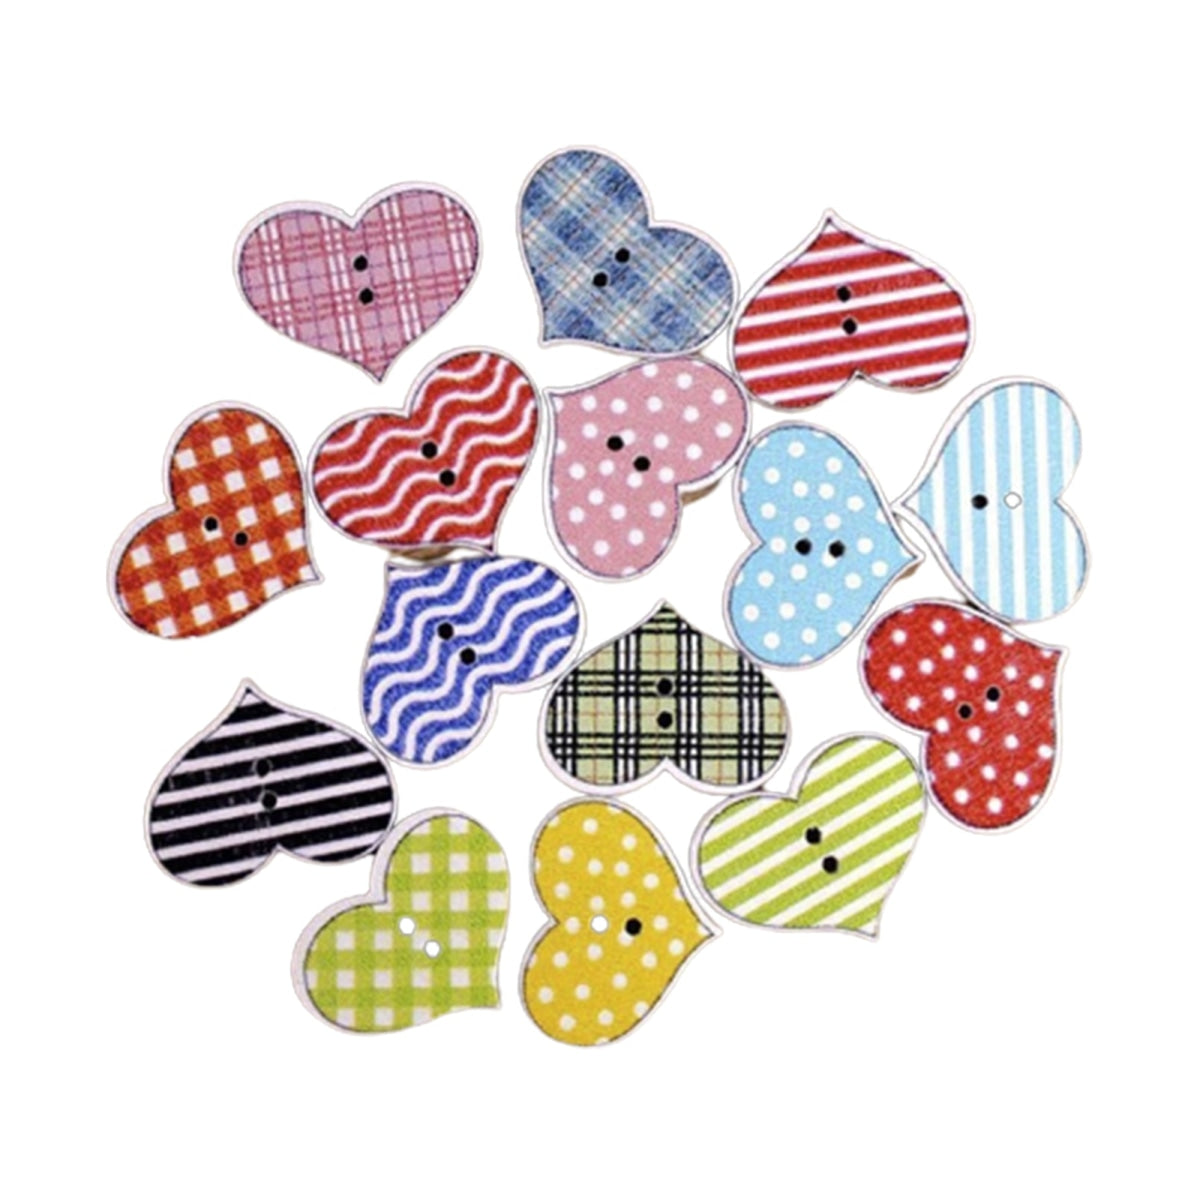 50Pcs Heart Shape Decorative Painted Wooden Buttons Wood Button Decorations Clothing